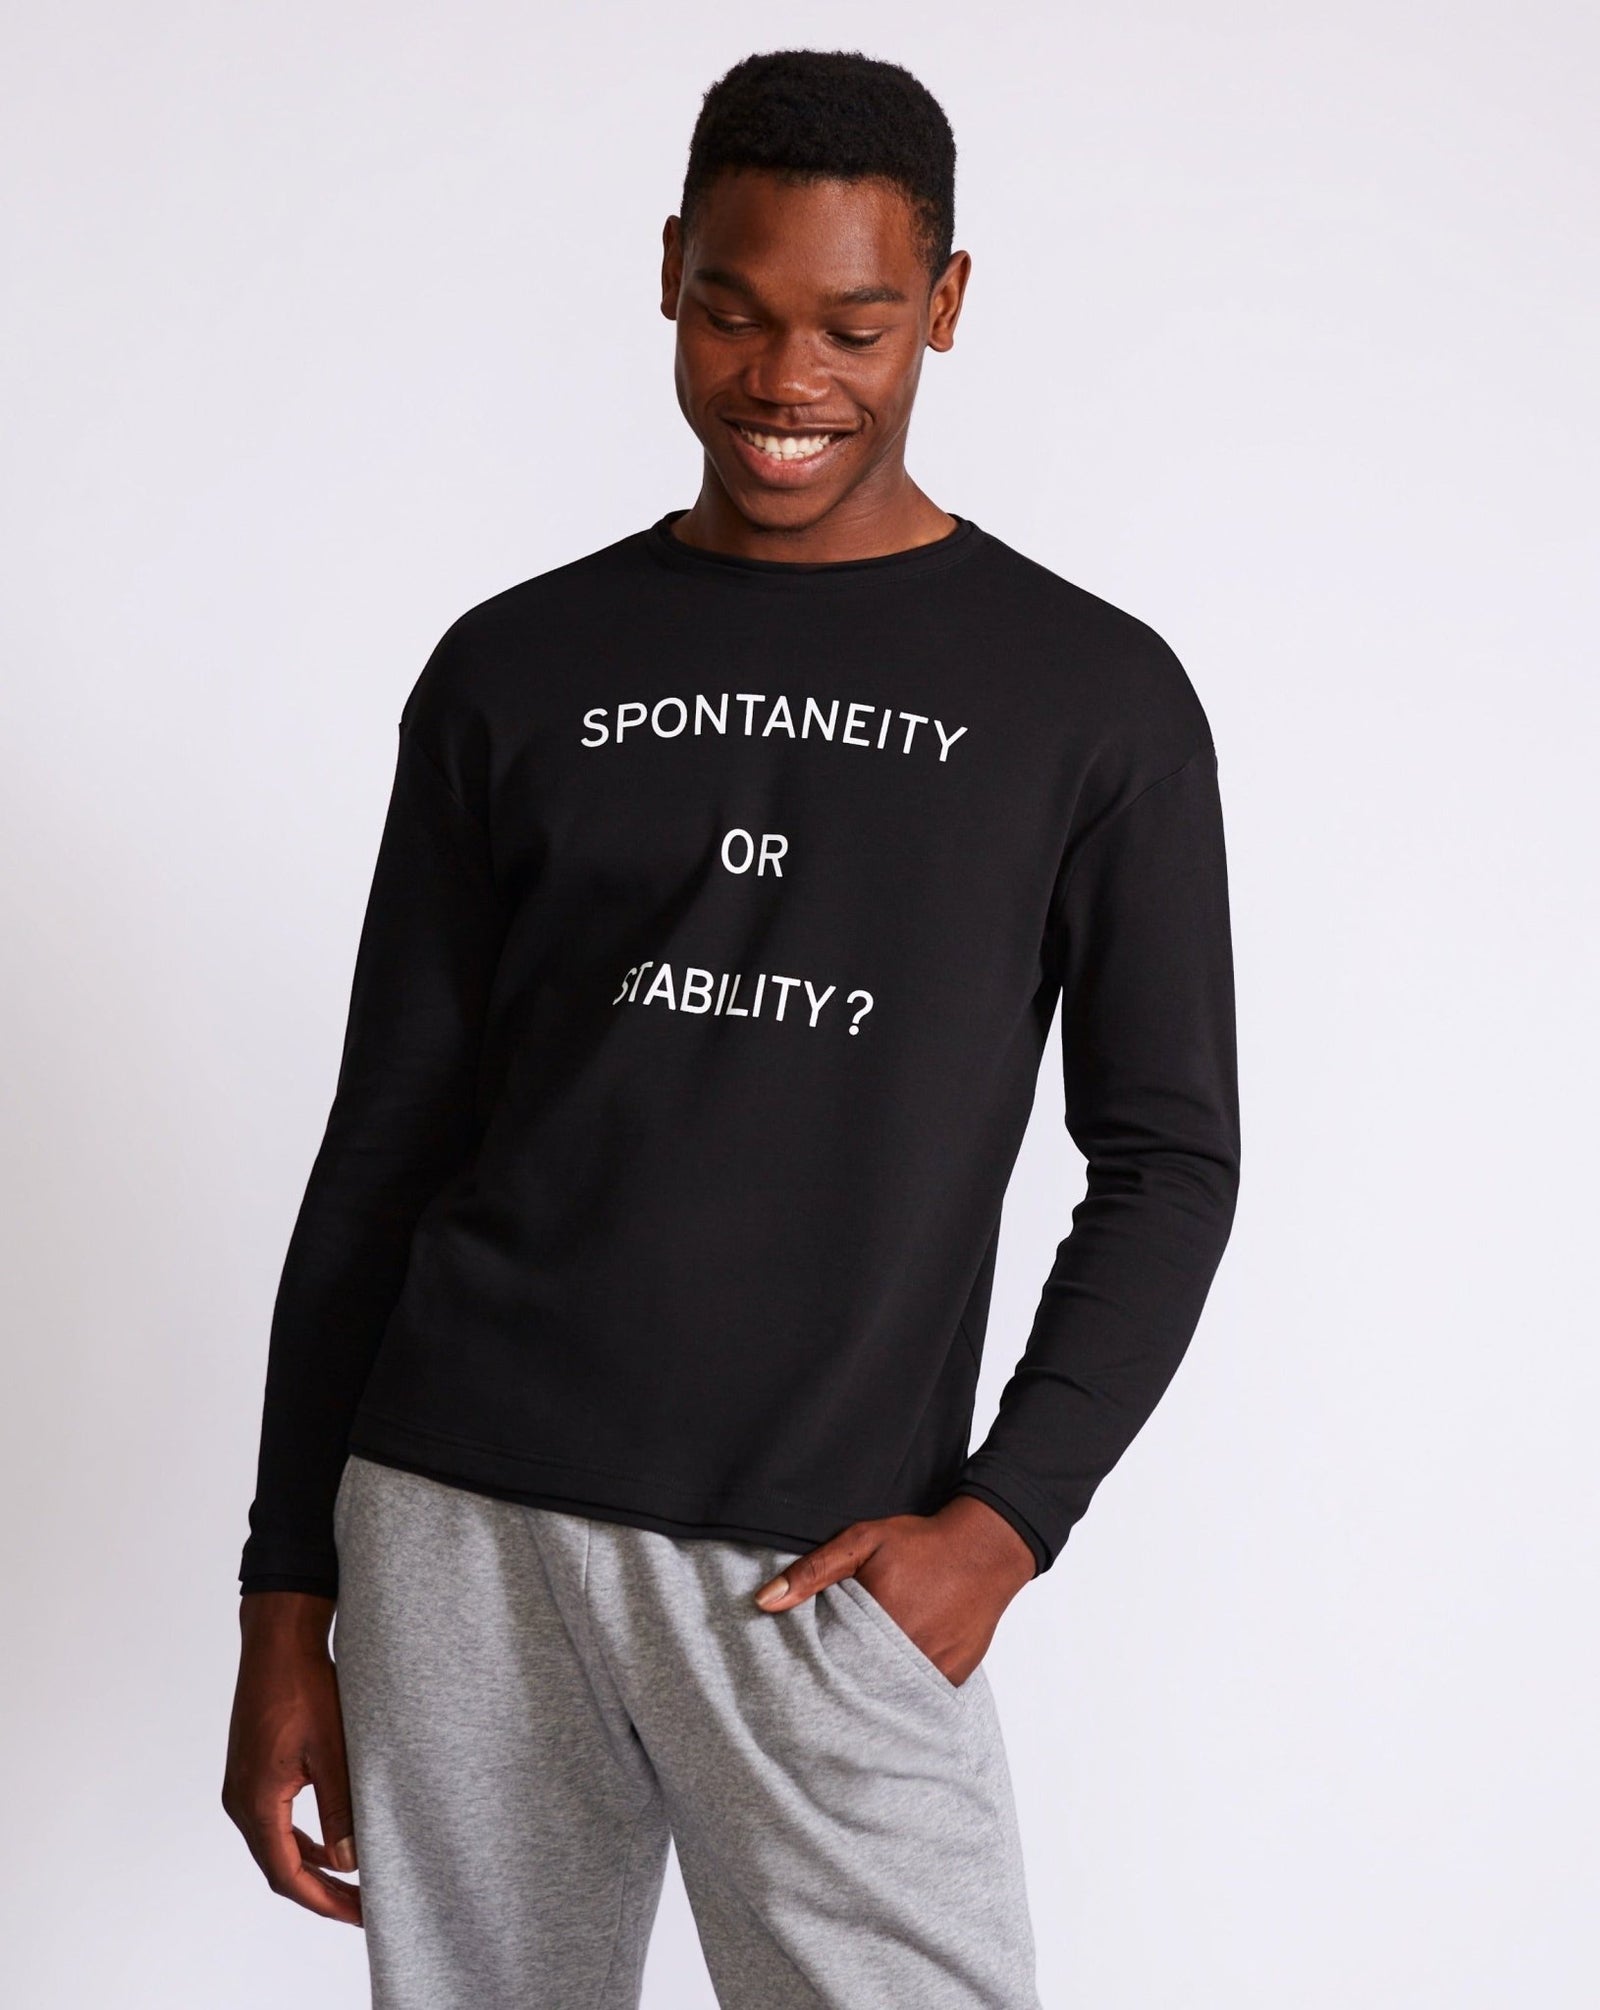 Spontaneity or stability? - OBLIVIOUS?